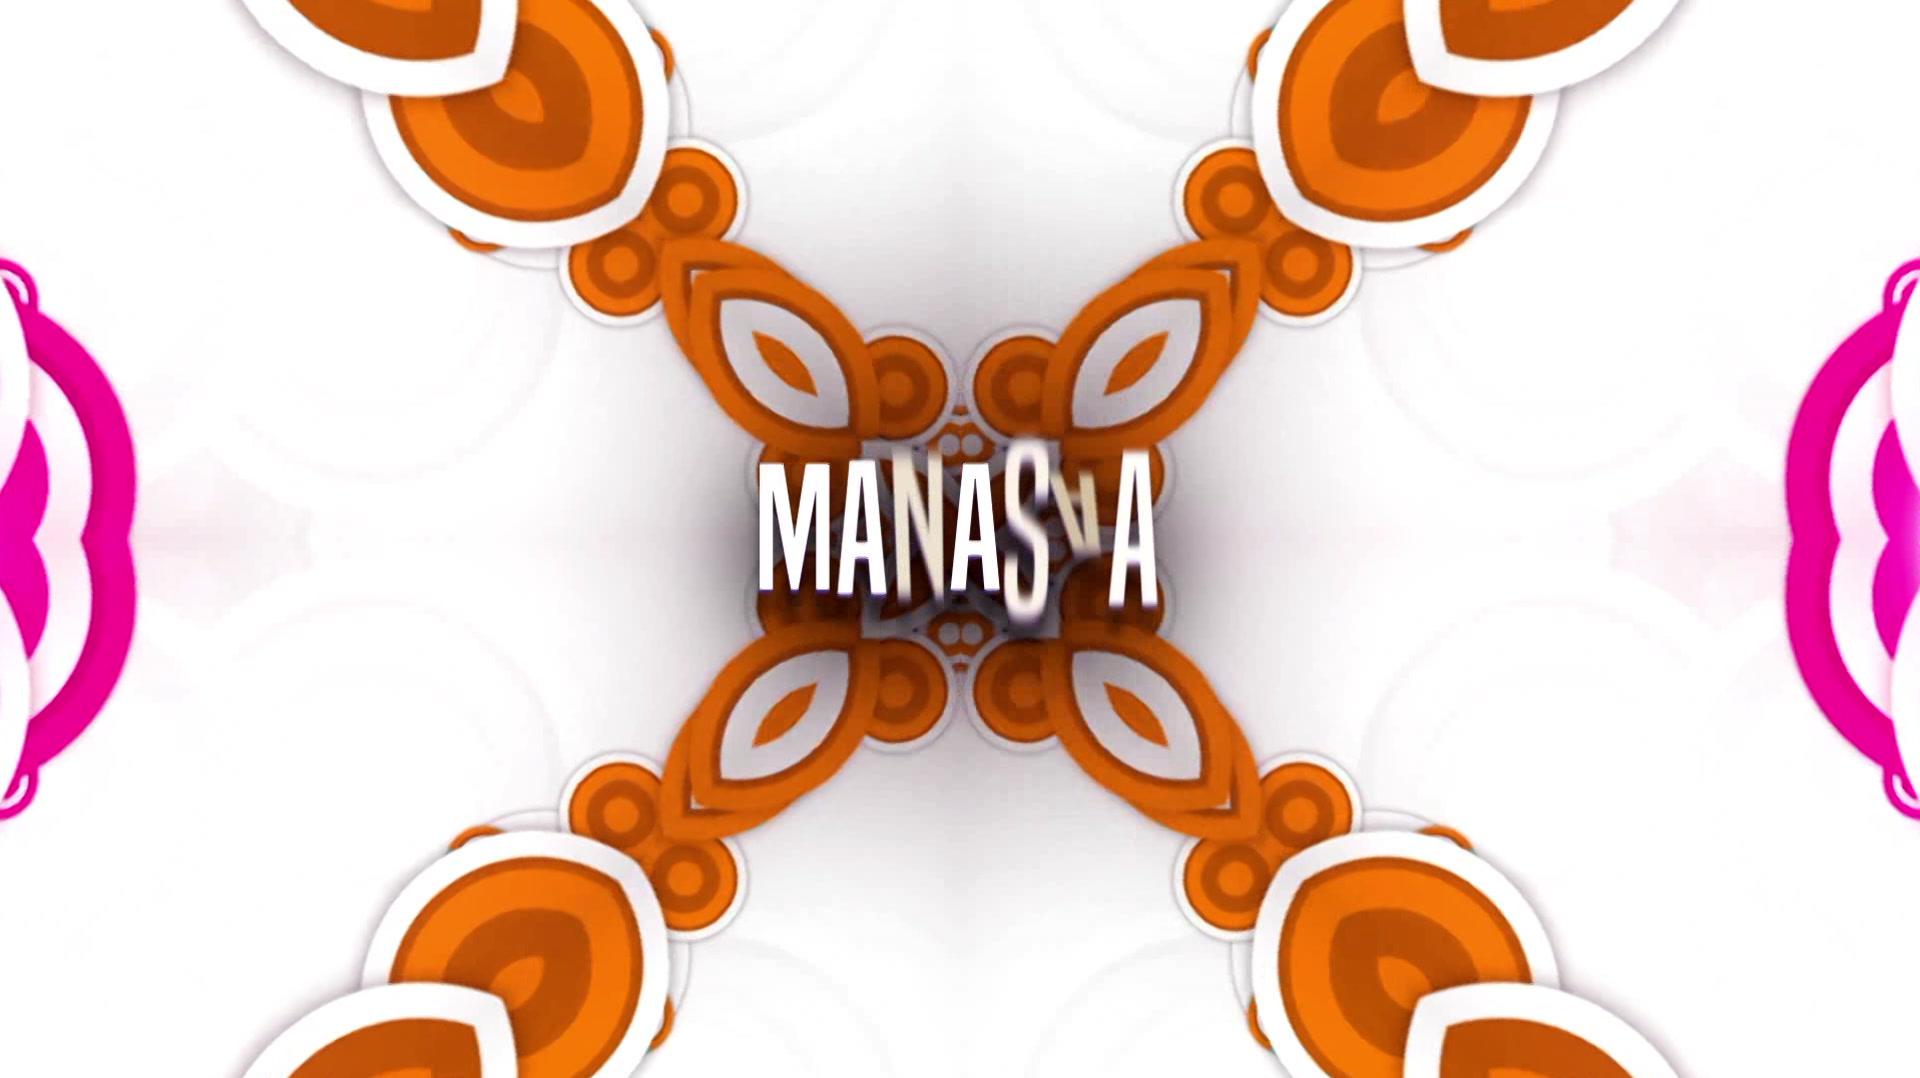 A.R. Rahman - Manasaa (Lyric Video)